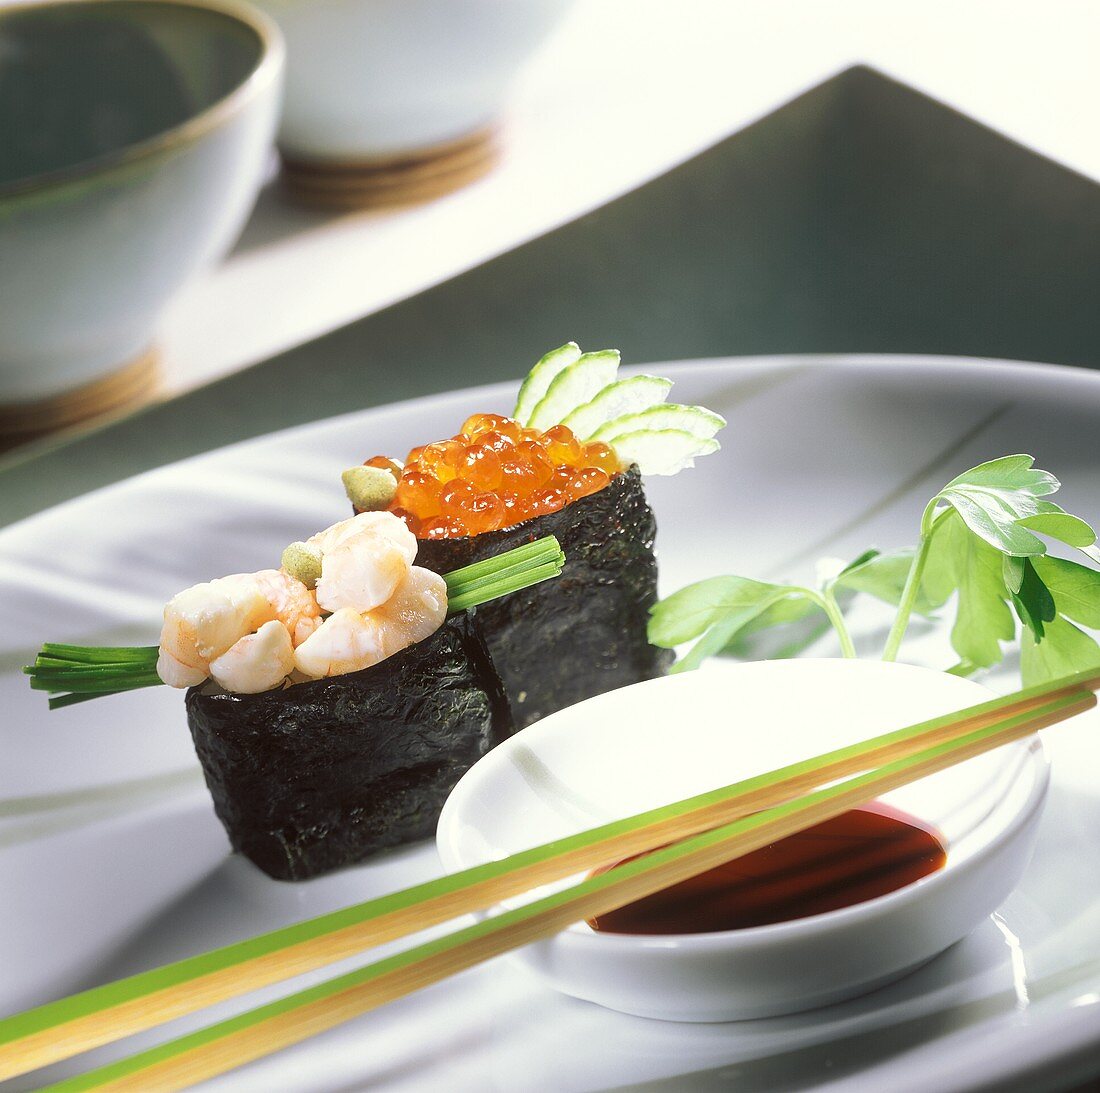 Sushi with shrimps and with salmon roe (Gunkan maki sushi)